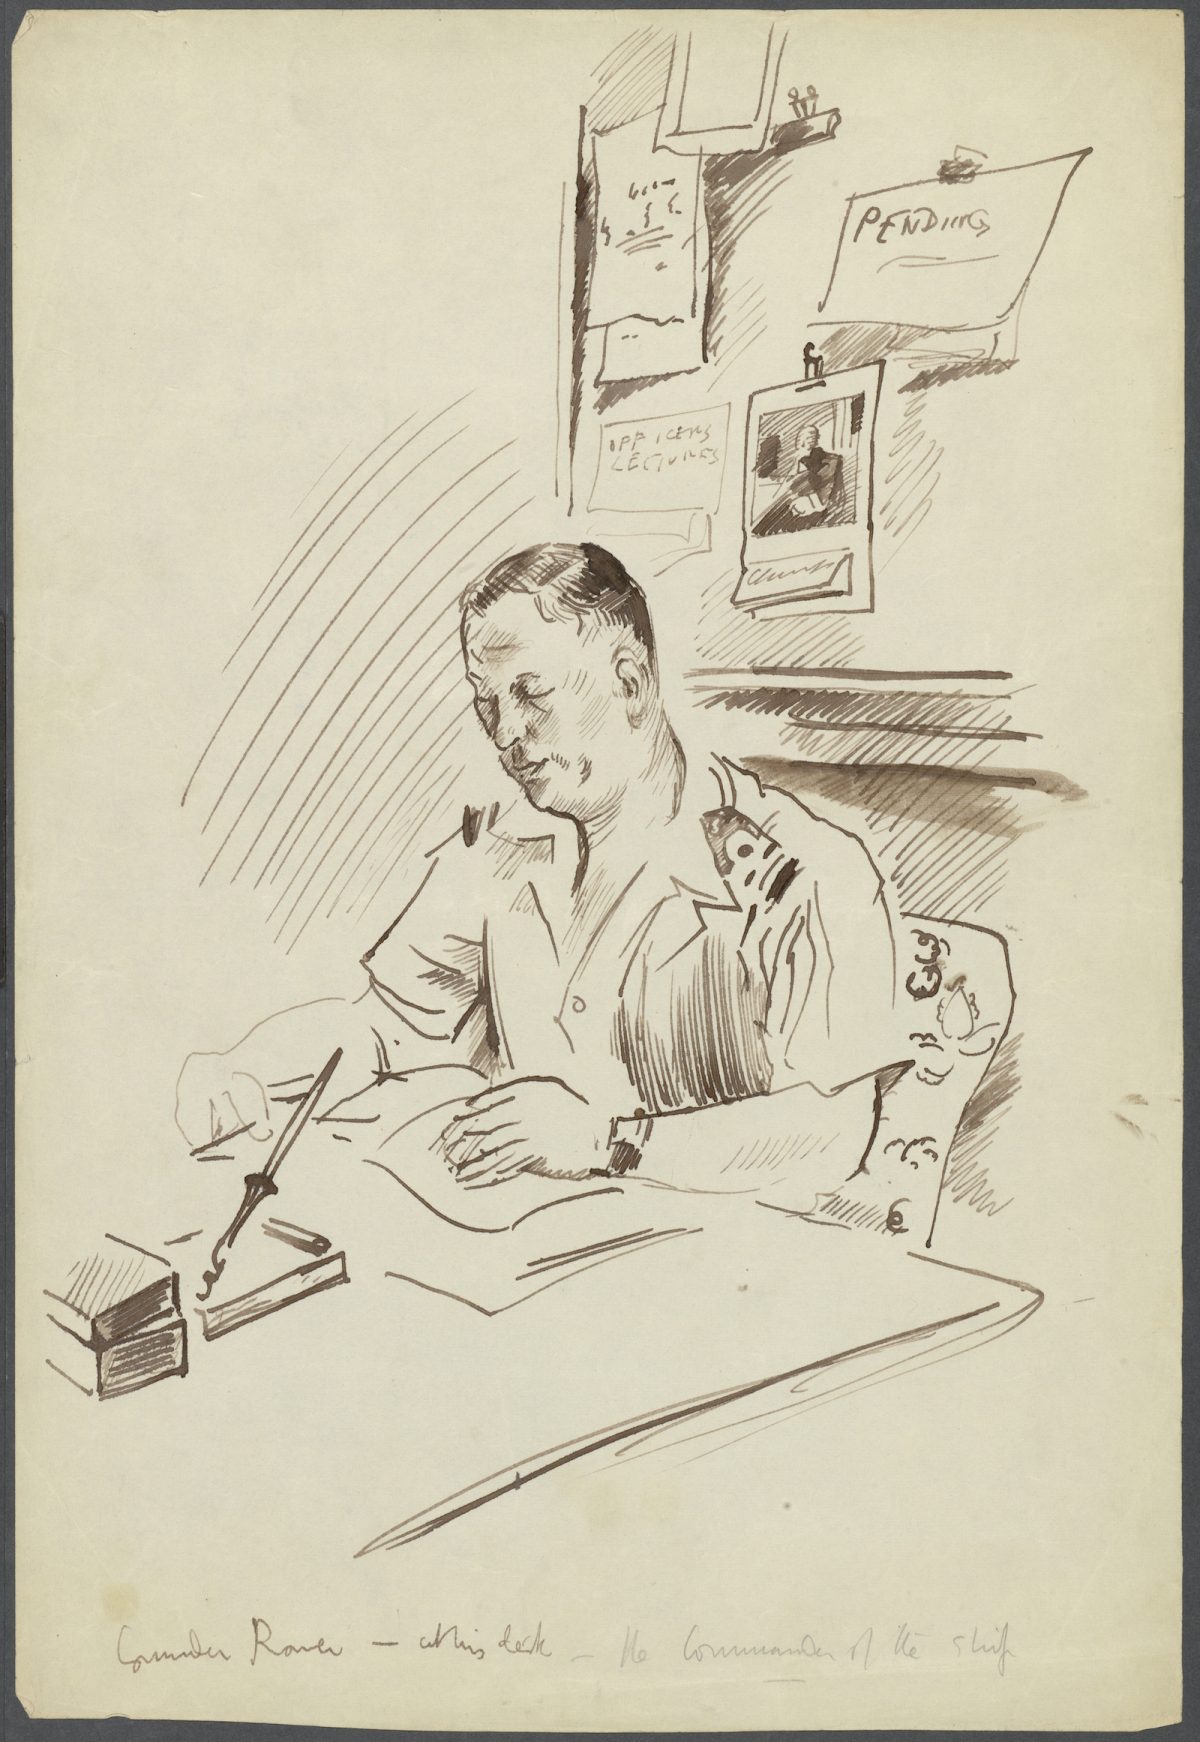 Cecil Beaton, war, drawings